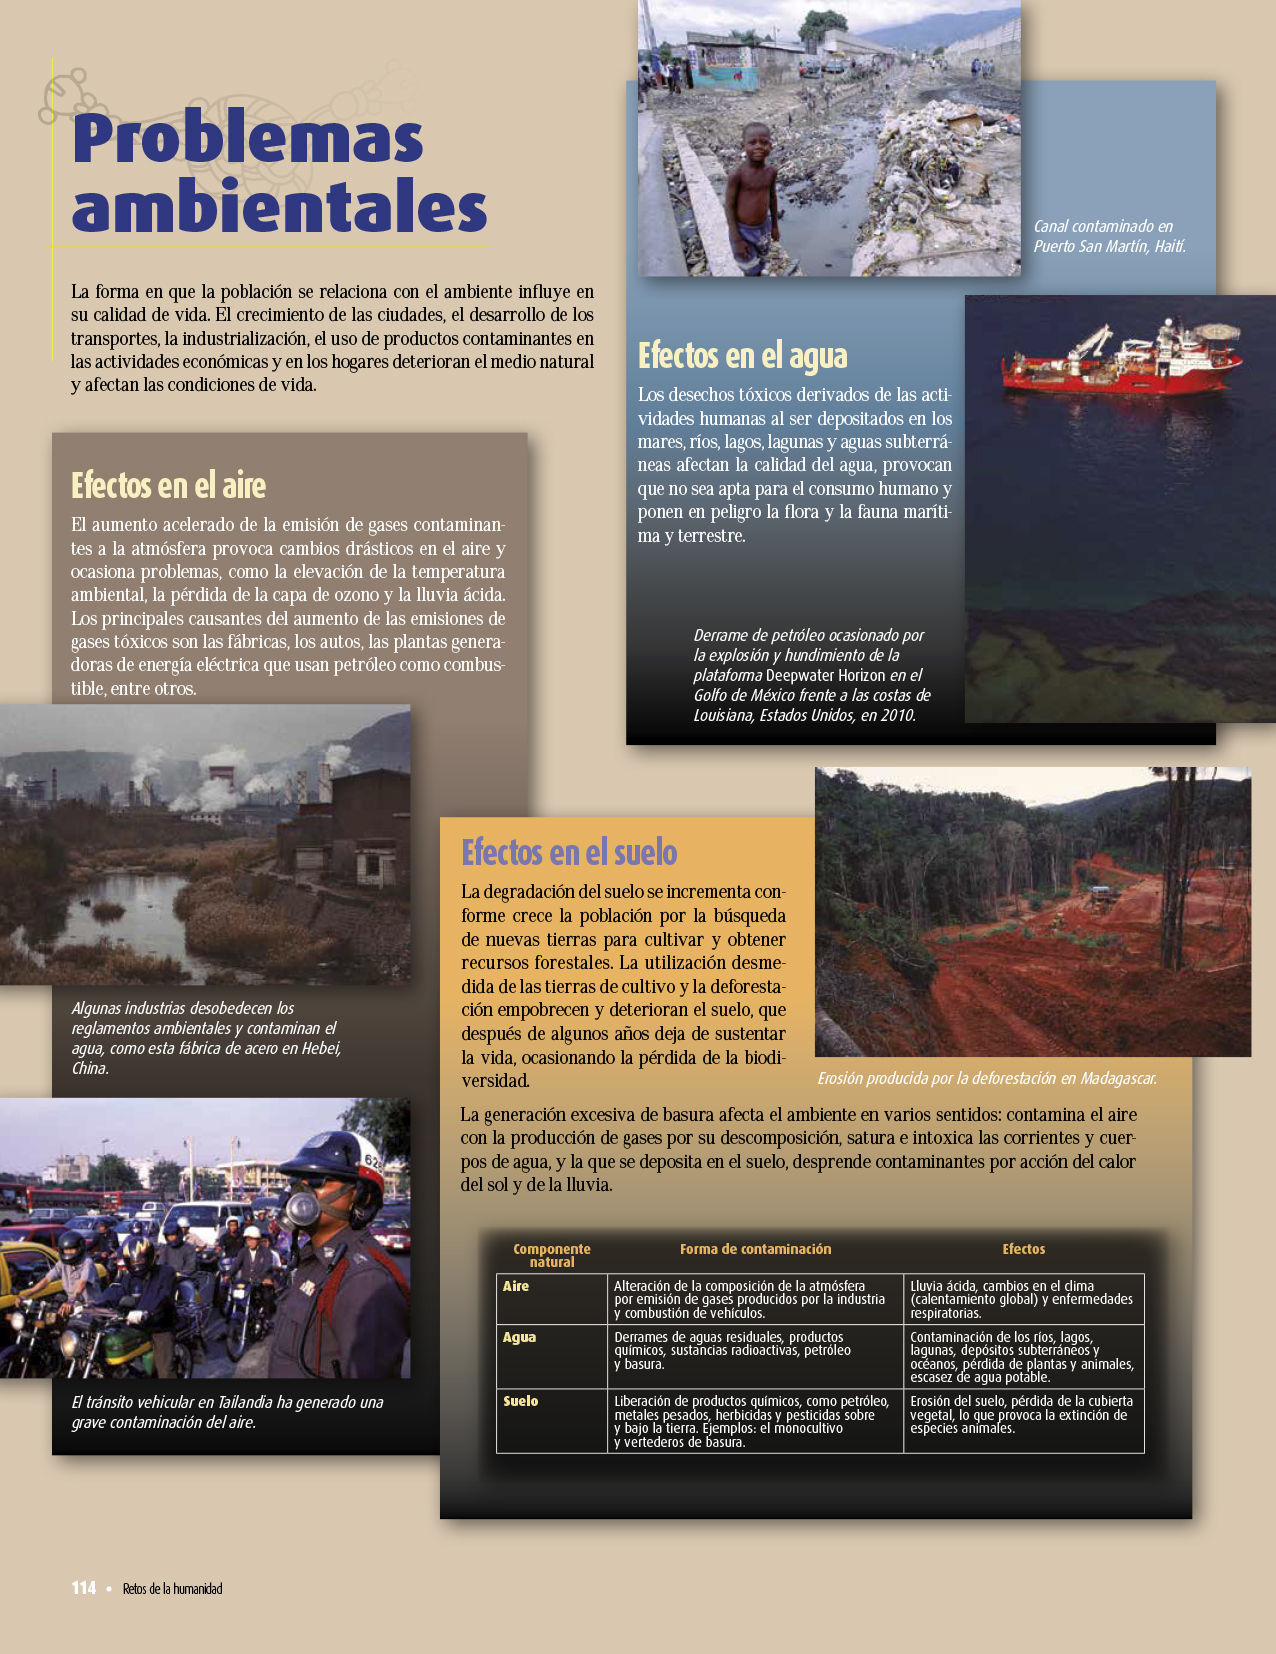 Atlas De La Geografia Del Mundo Pagina 27 6 Grado 2020 ...